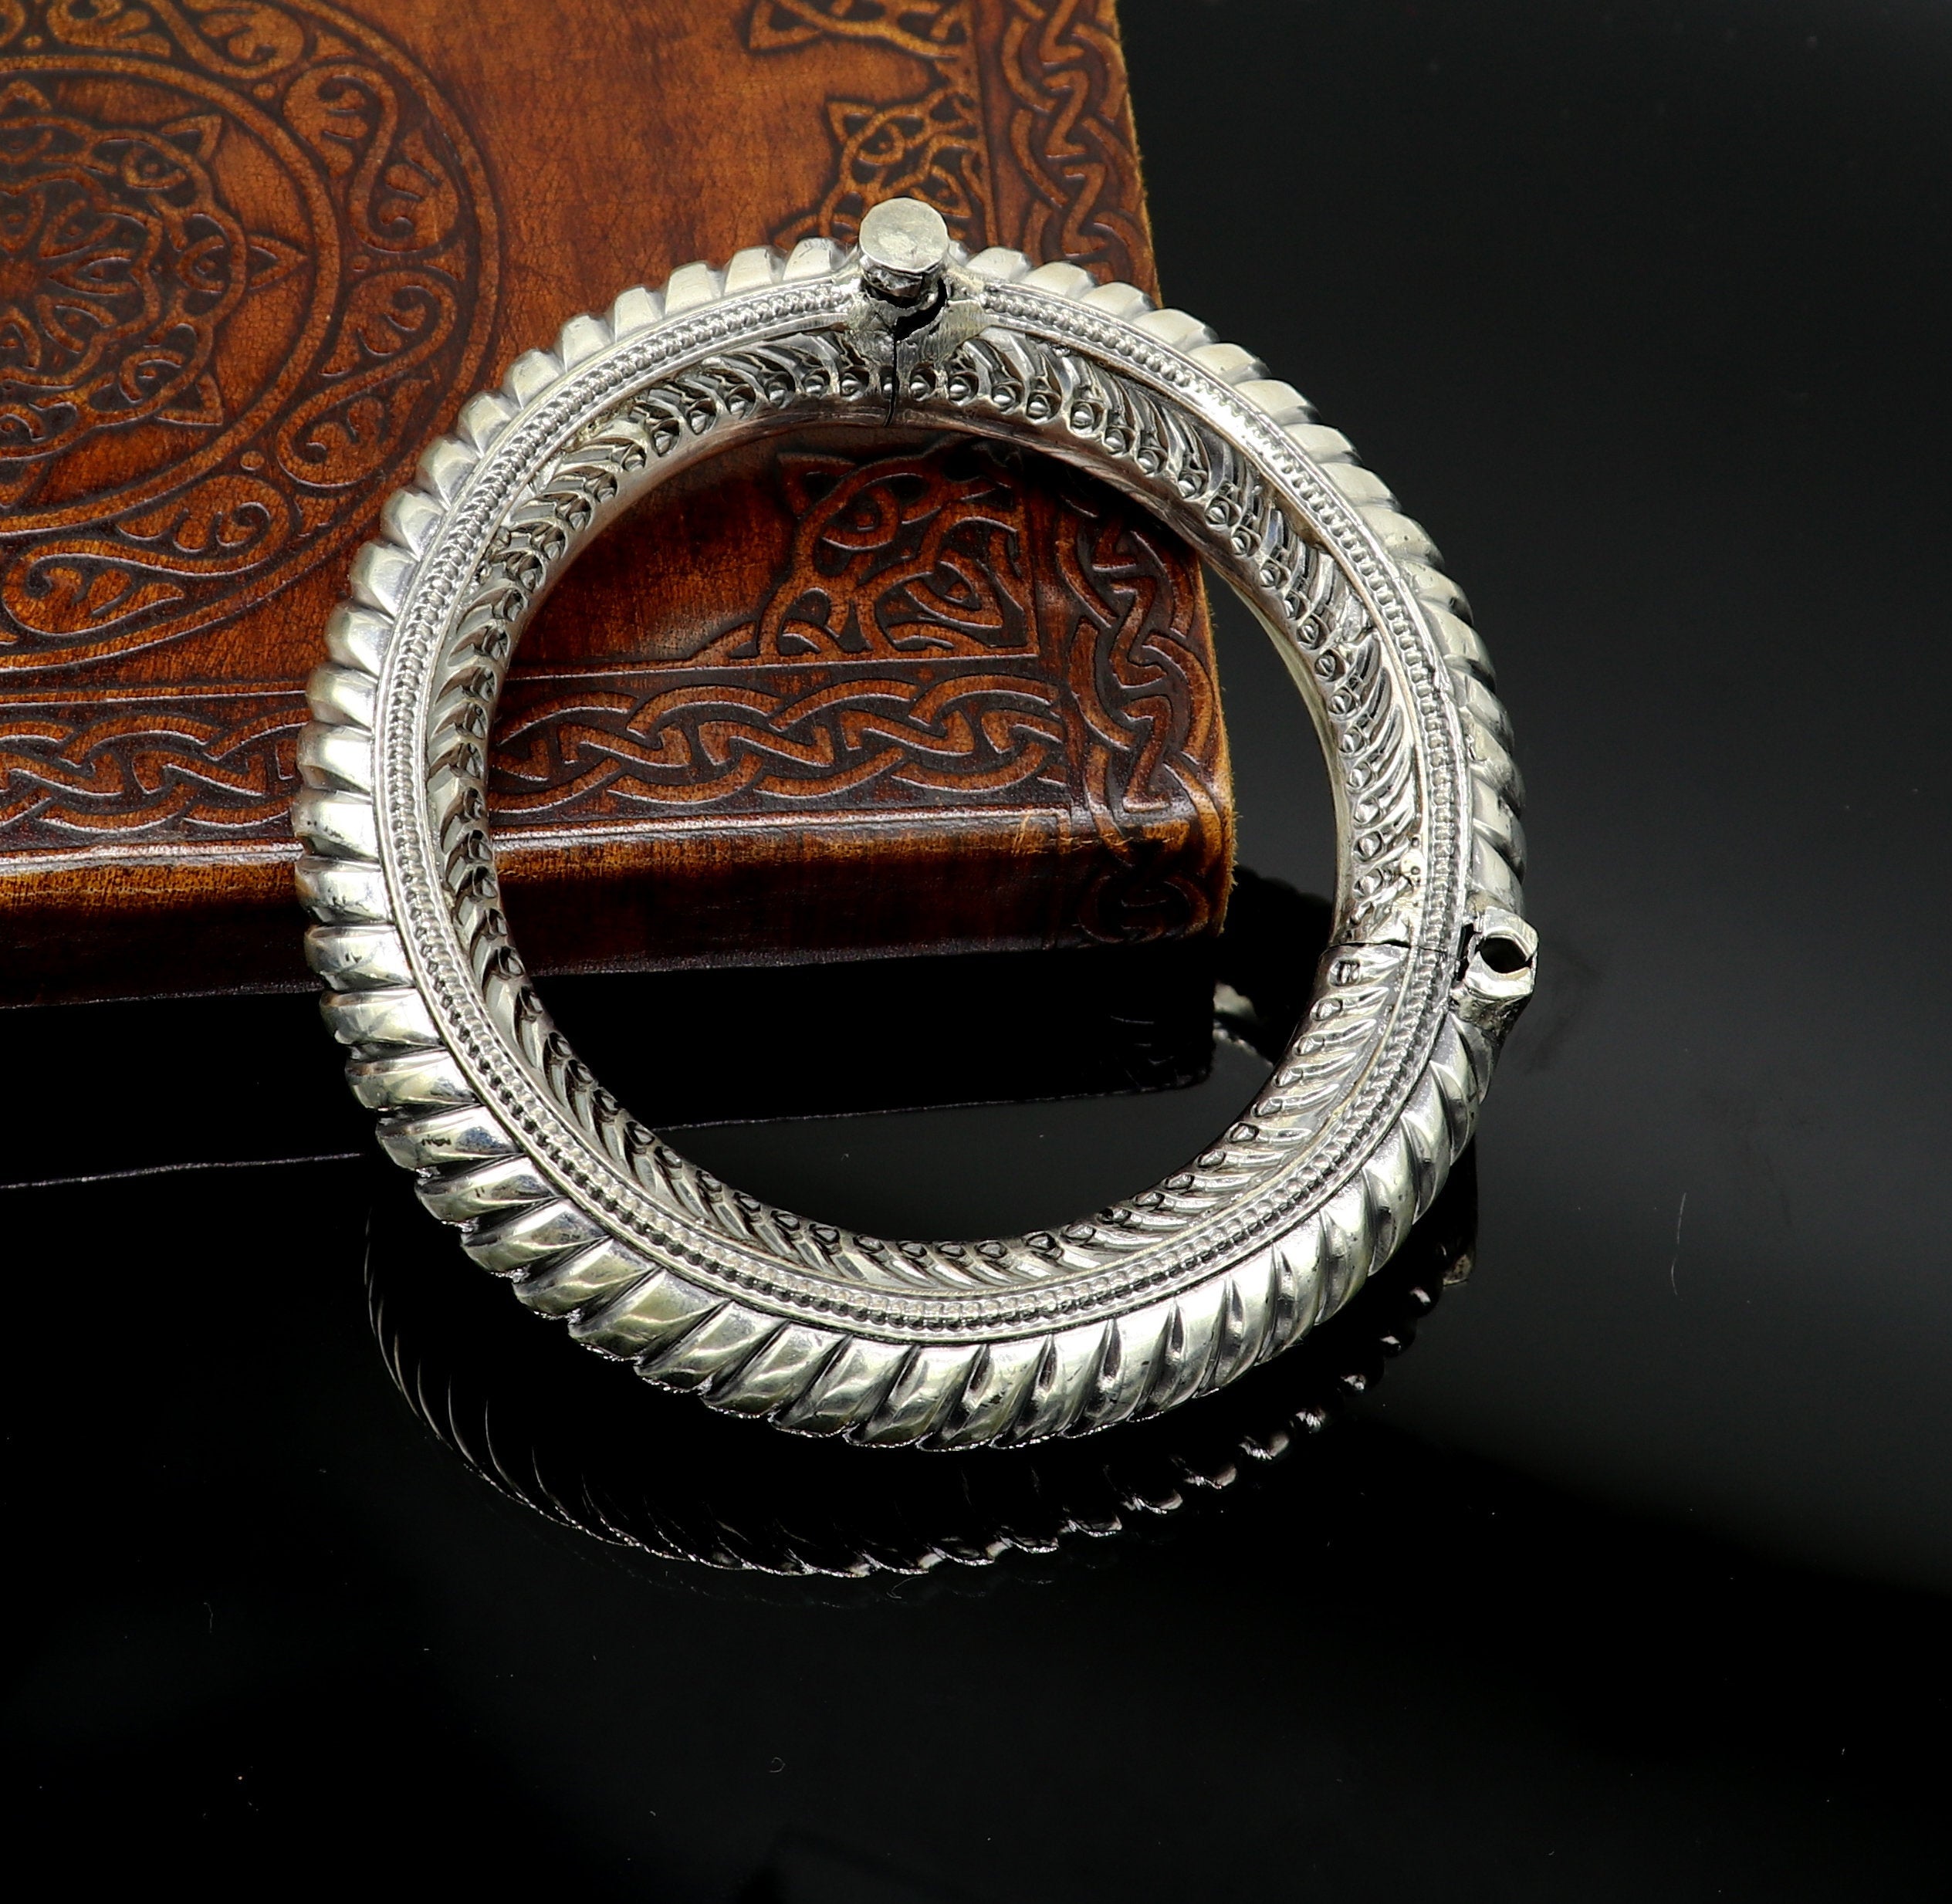 Sale Rajasthan tribal silver jewelry old silver cuff bracelet gorgeous  genuine bangle kada for women girls ethnic worn bangle cb09  TRIBAL  ORNAMENTS